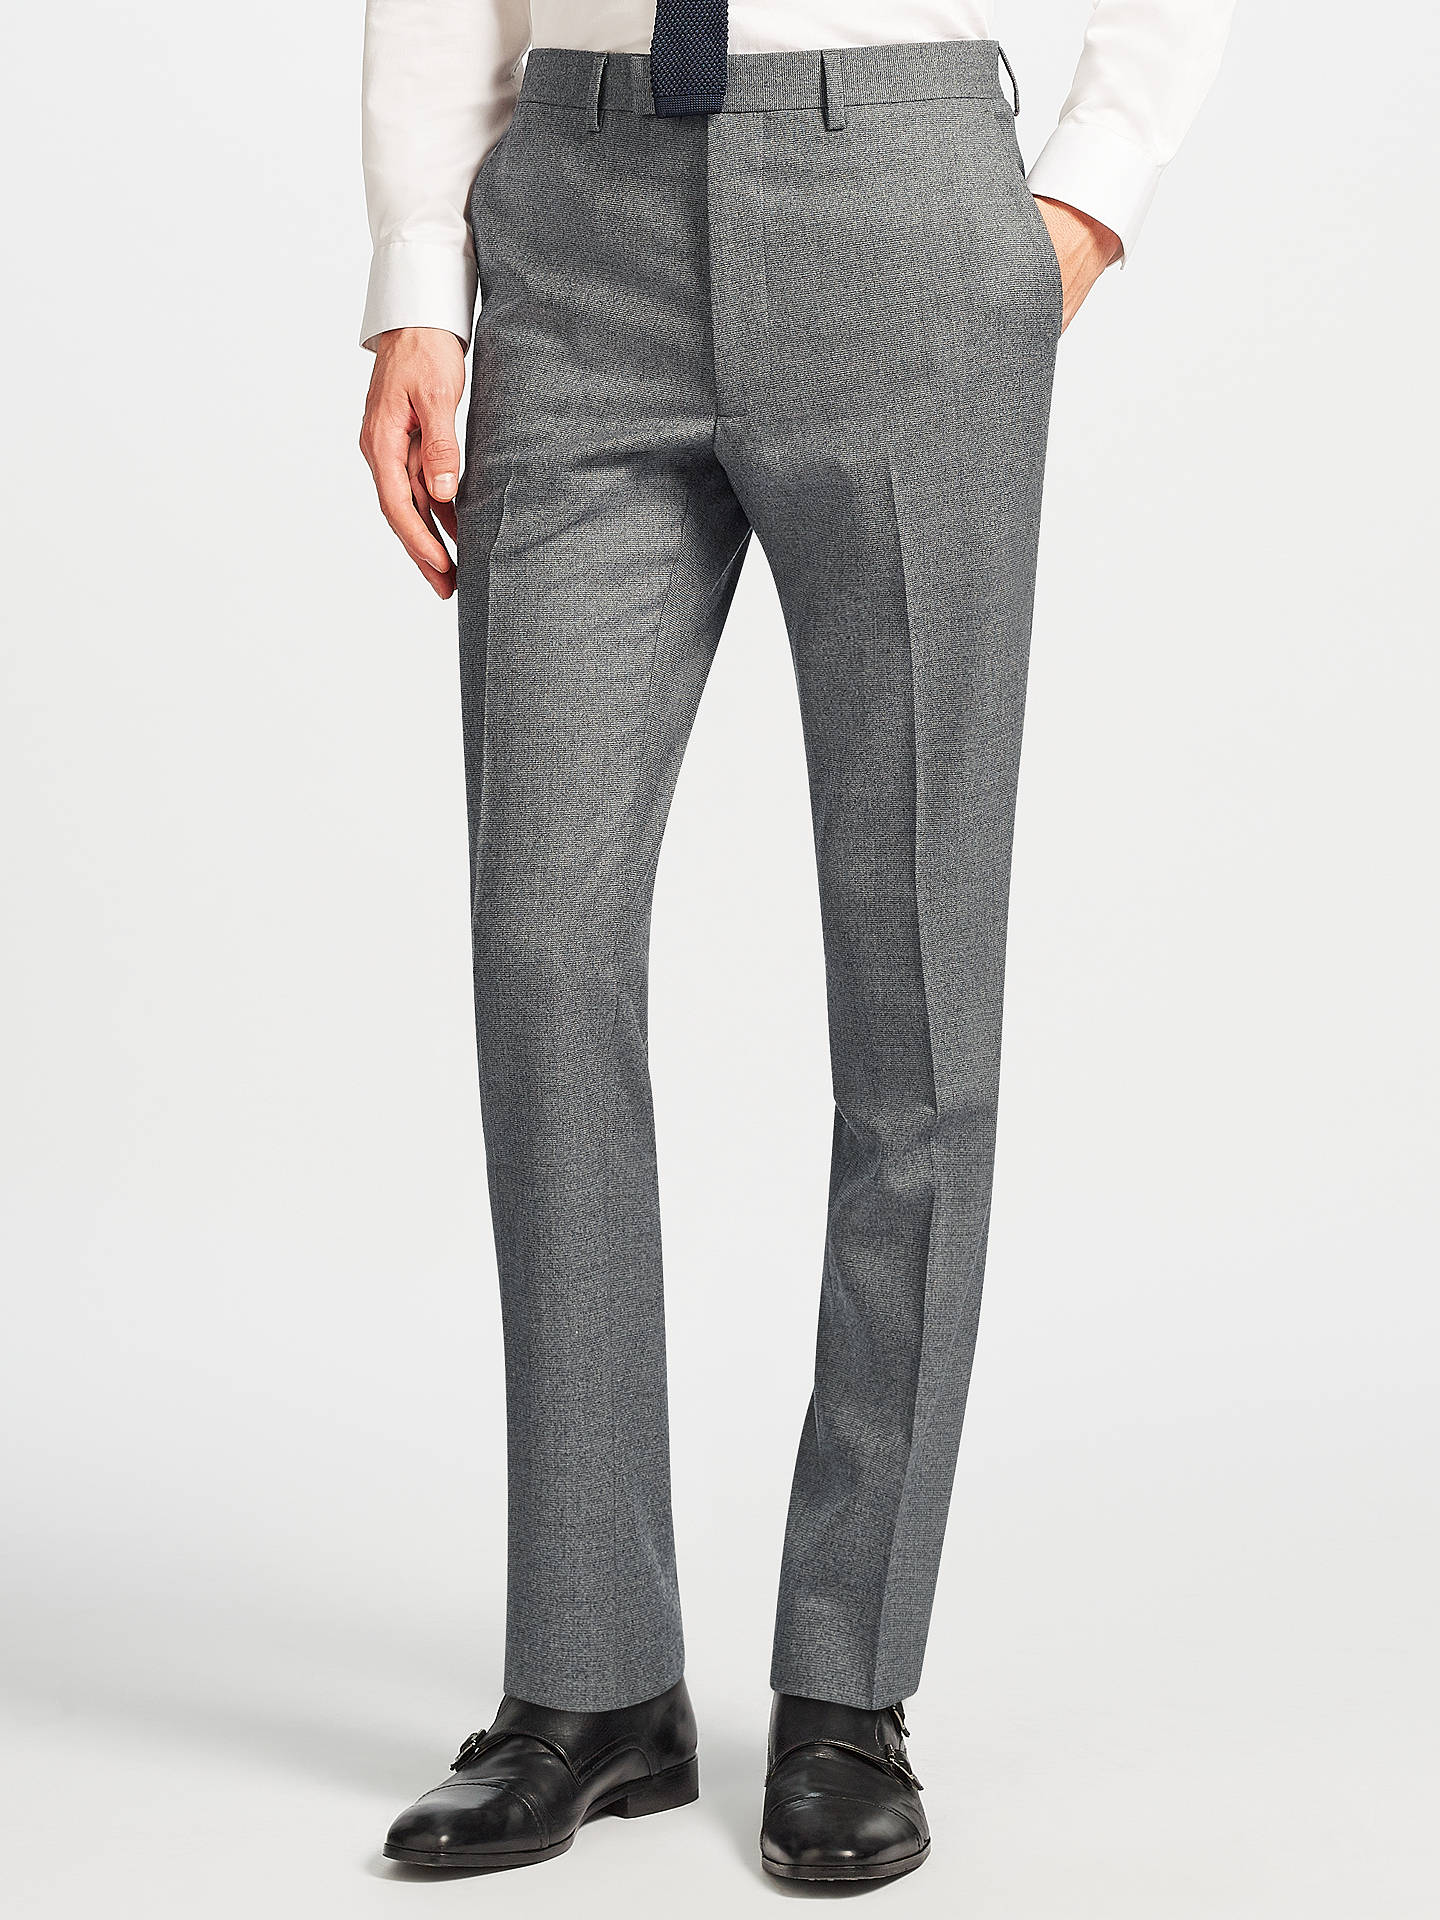 Kin Clifton Slim Suit Trousers, Grey at John Lewis & Partners